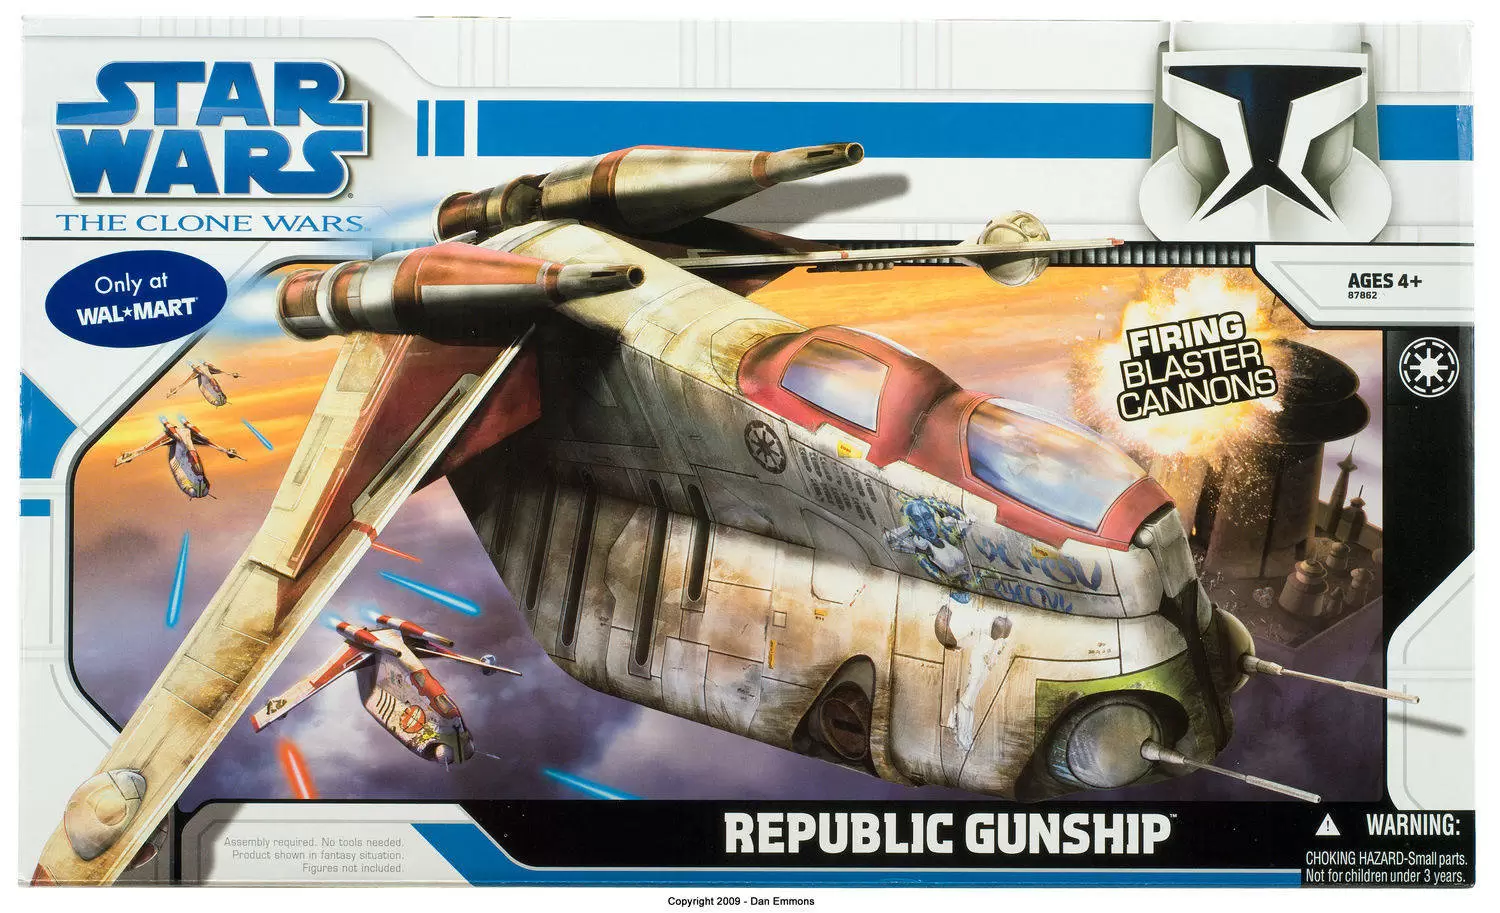 The Clone Wars (TCW 2008) - Republic Gunship